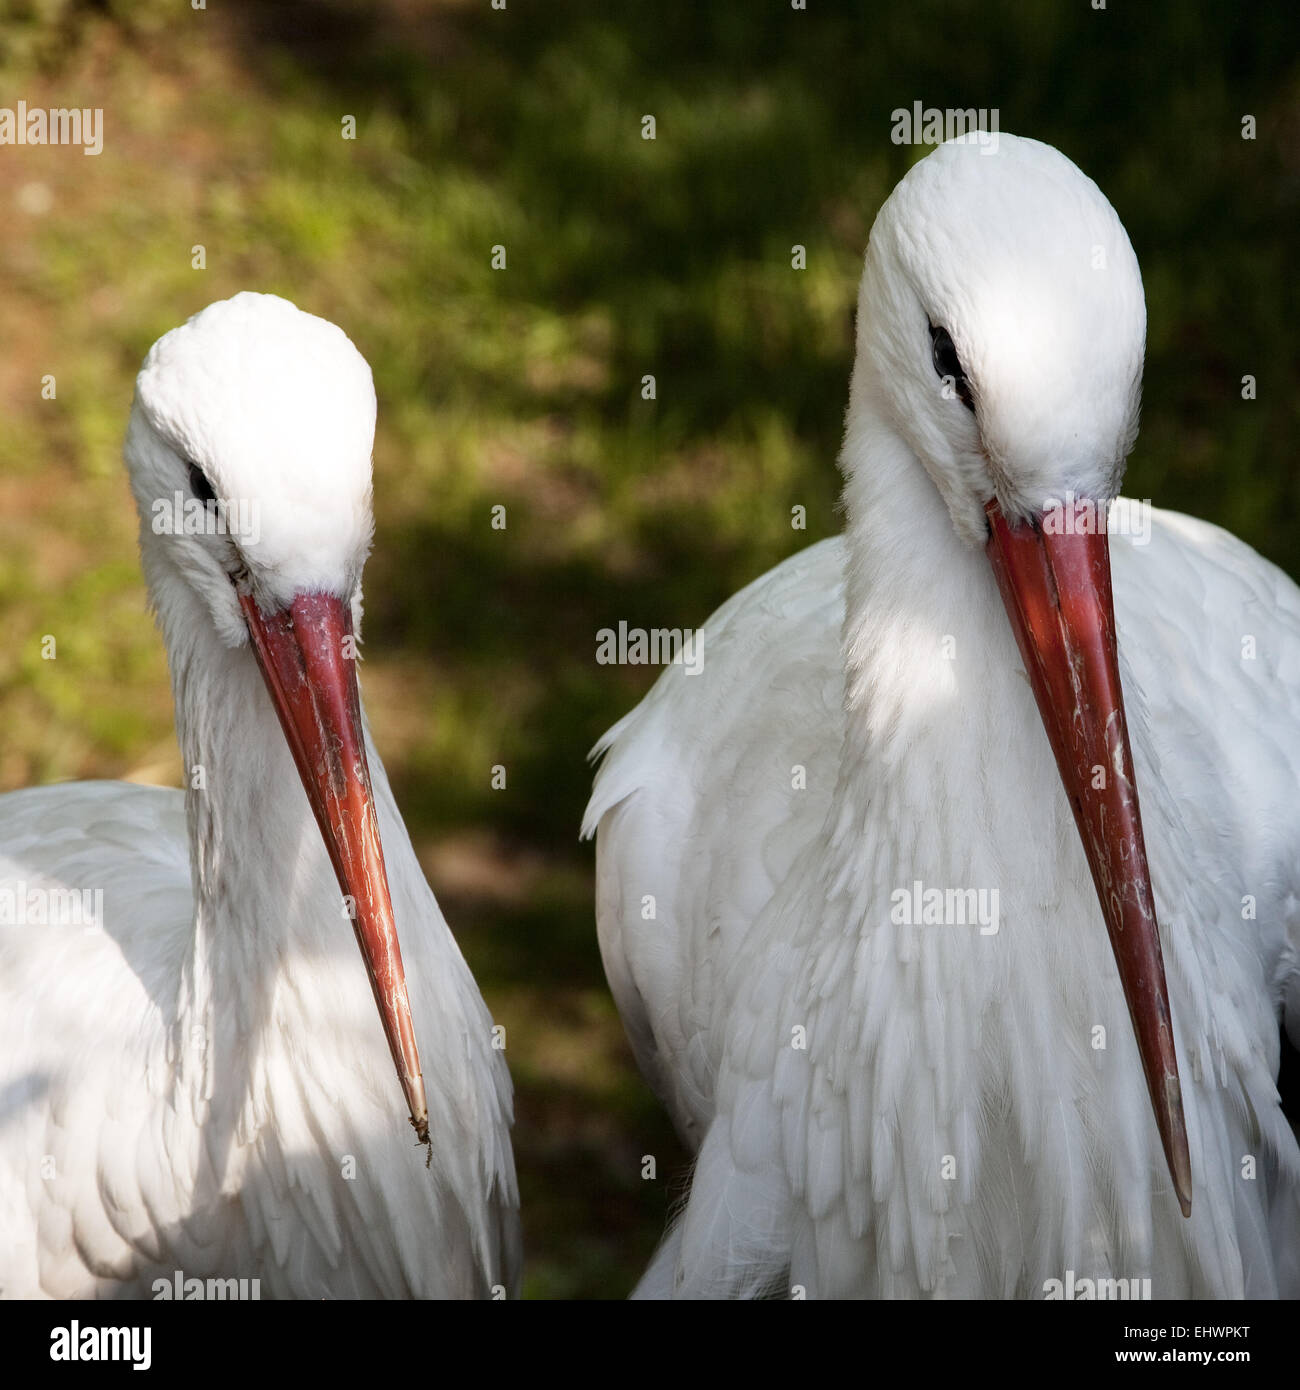 Stork couple, Duisburg Zoo, Germany. Stock Photo